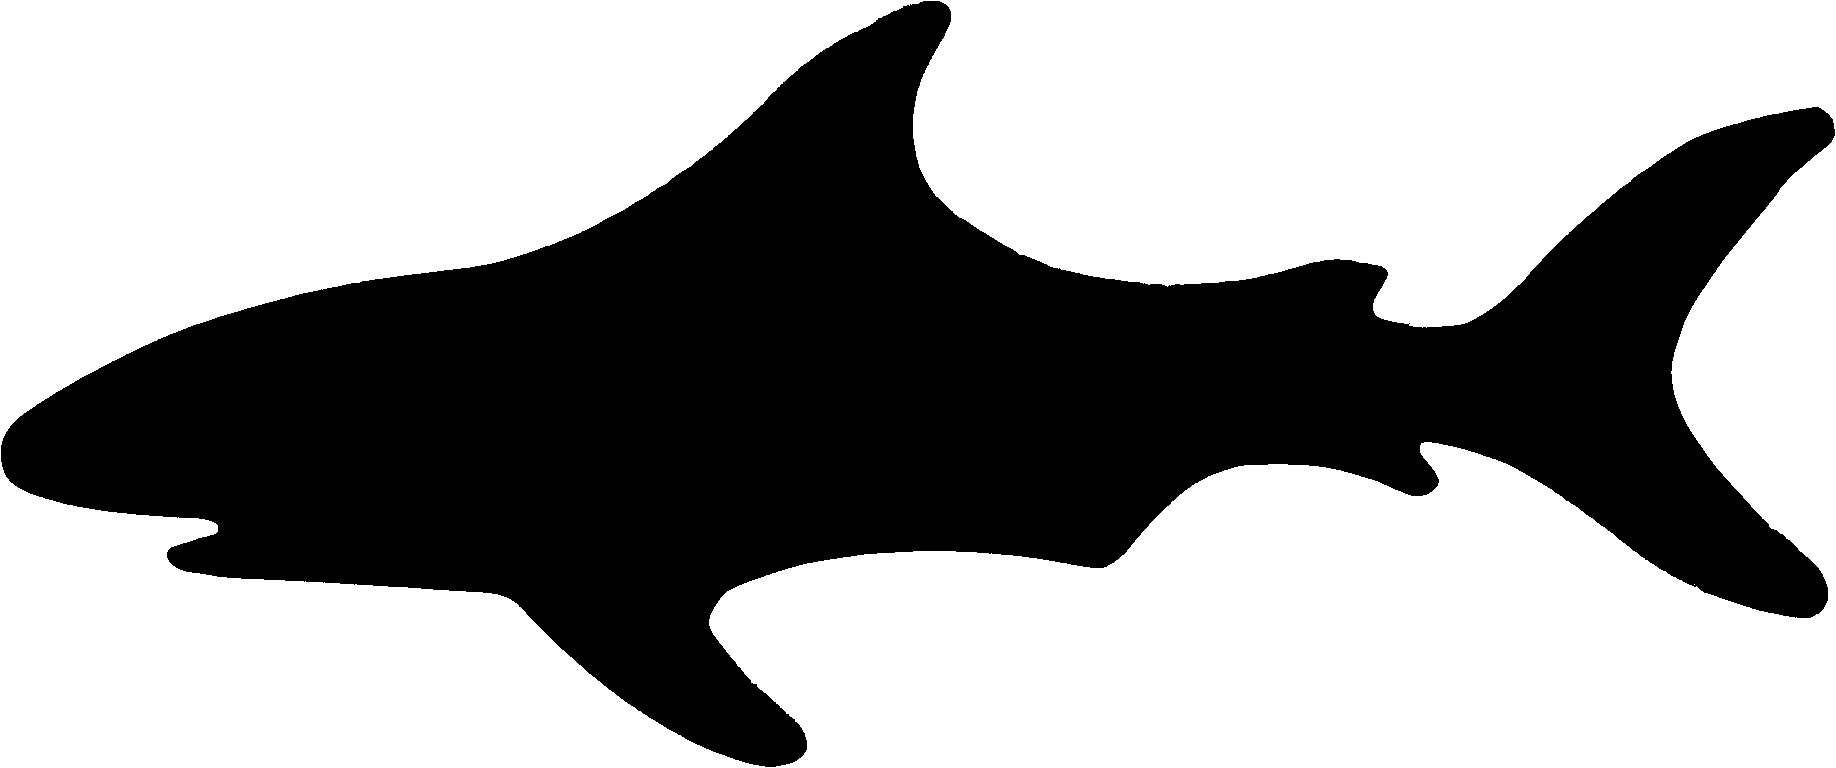 Florida shark images clipart clipart